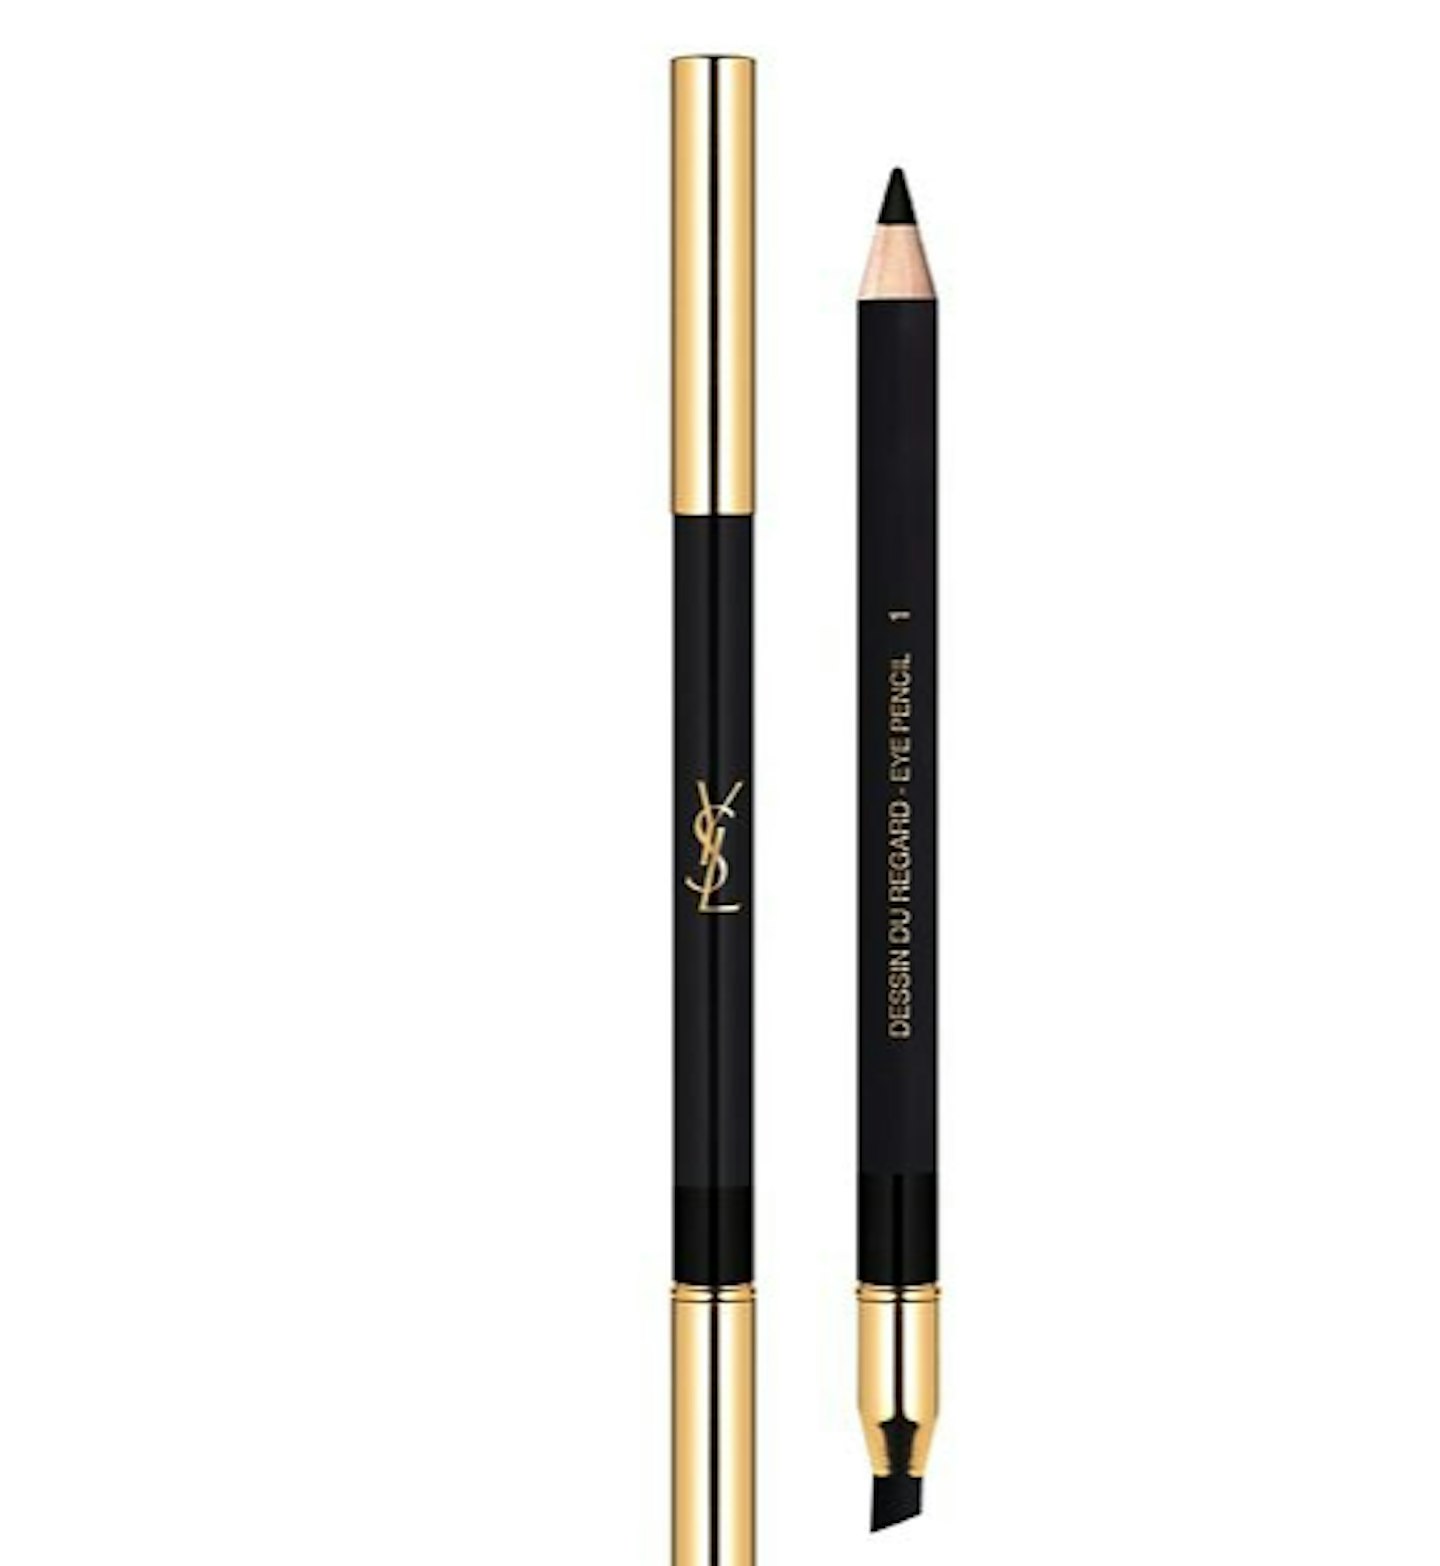 Yves Saint Laurent Dessin du Regard Pencil and Blending Tip, £21